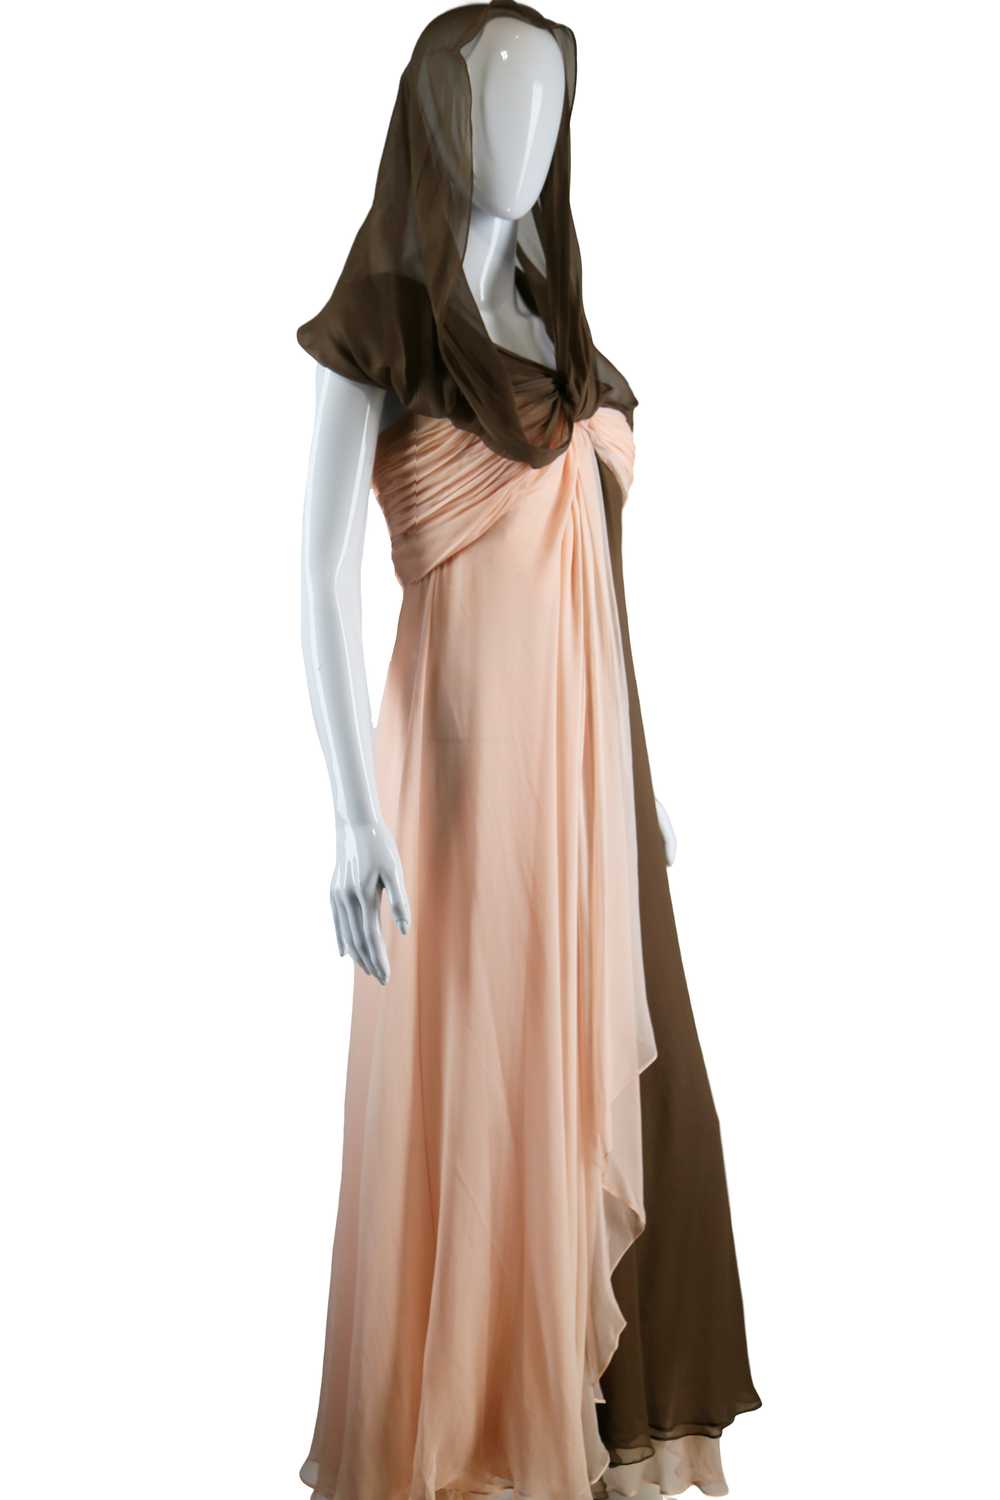 Bill Blass Grecian Silk Chiffon Gown - image 9